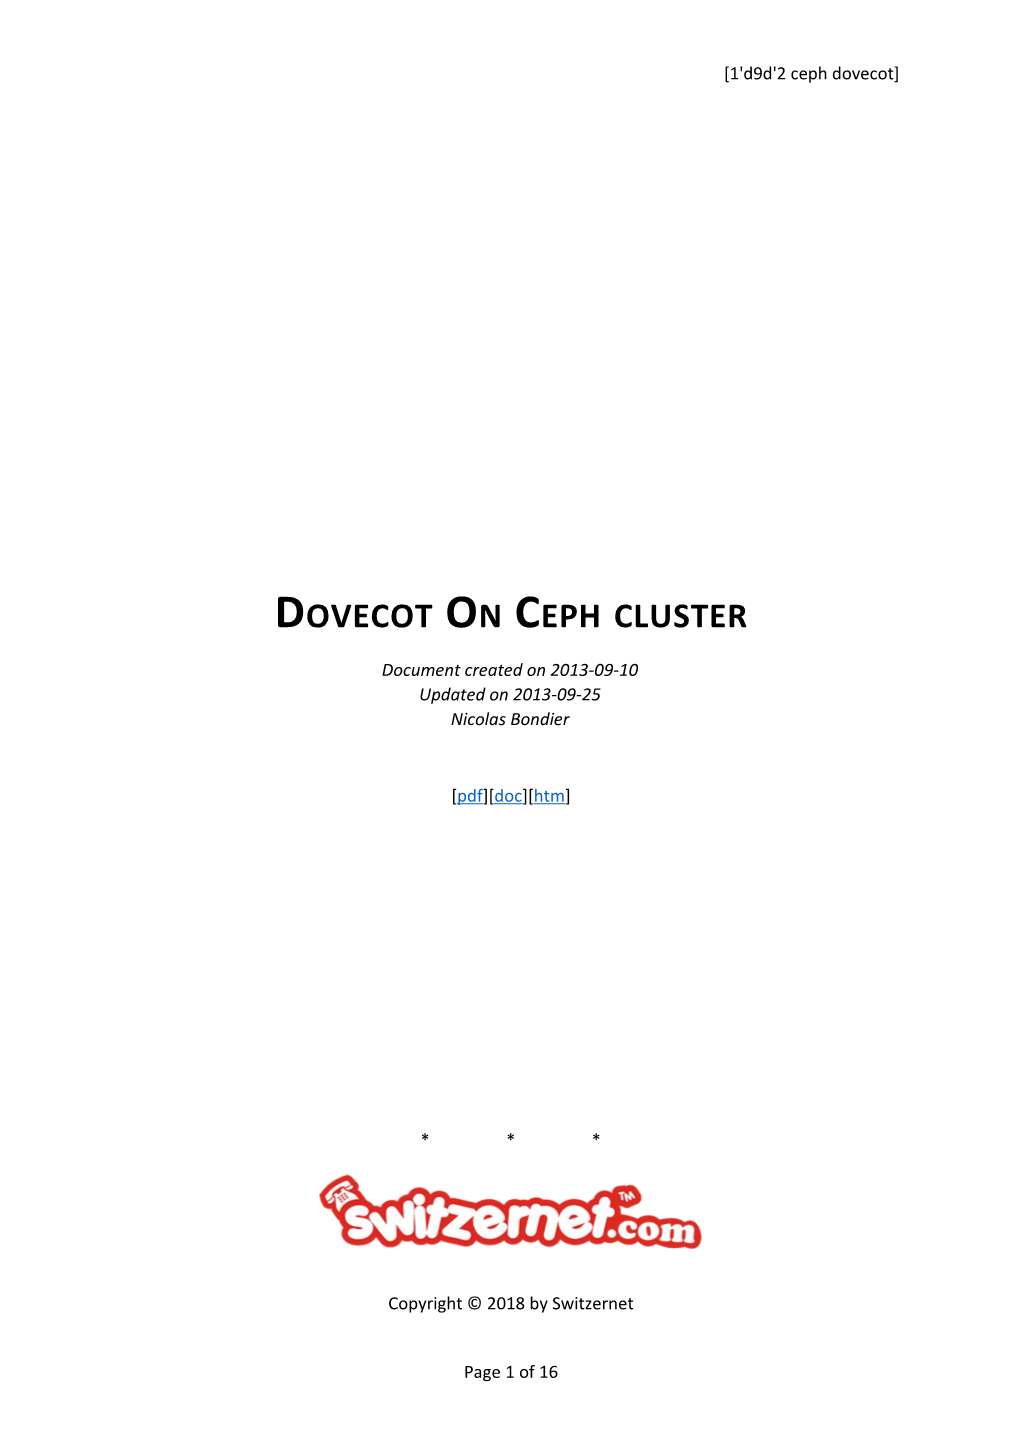 Dovecot on Ceph Cluster